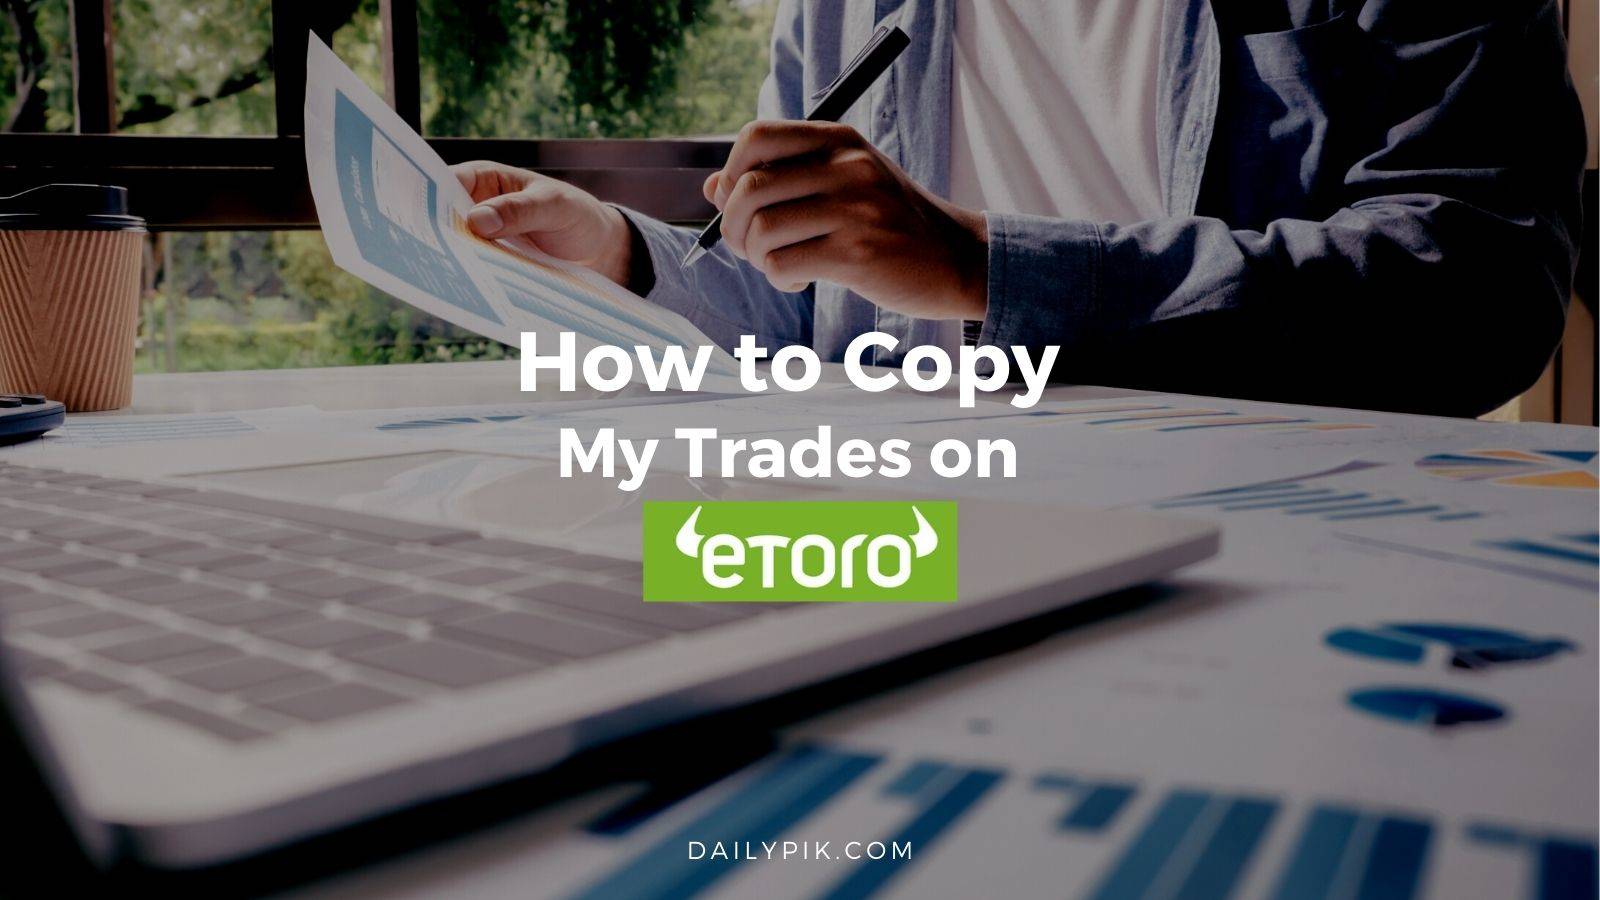 how to copytrade on etoro complete guide